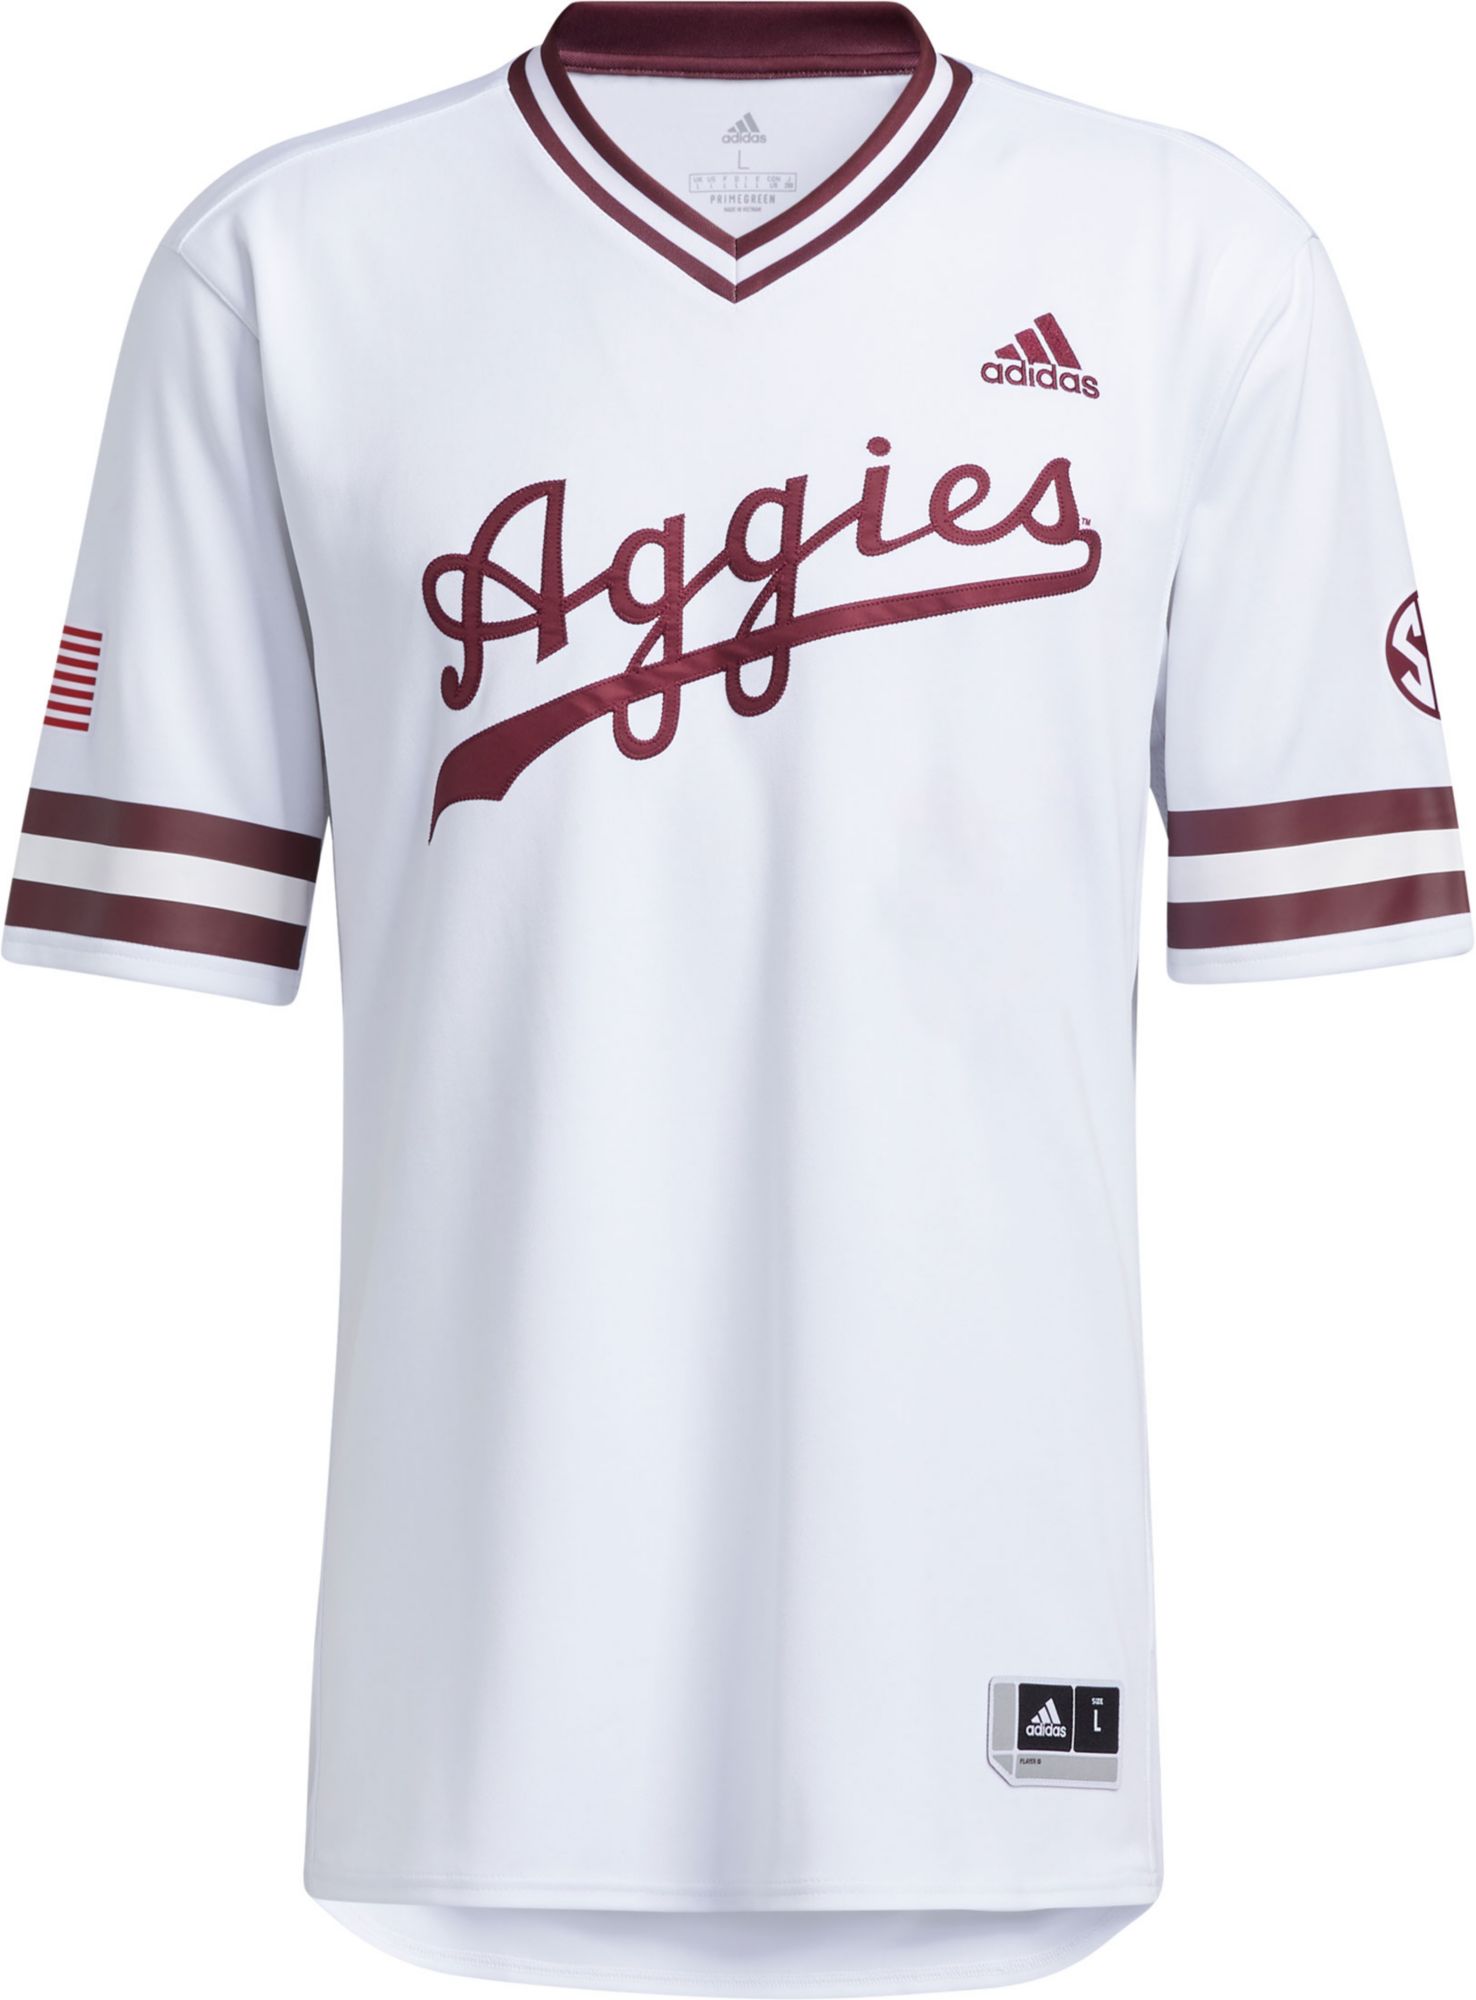 adidas Hispanic Heritage Baseball Jersey - White, Men's Baseball